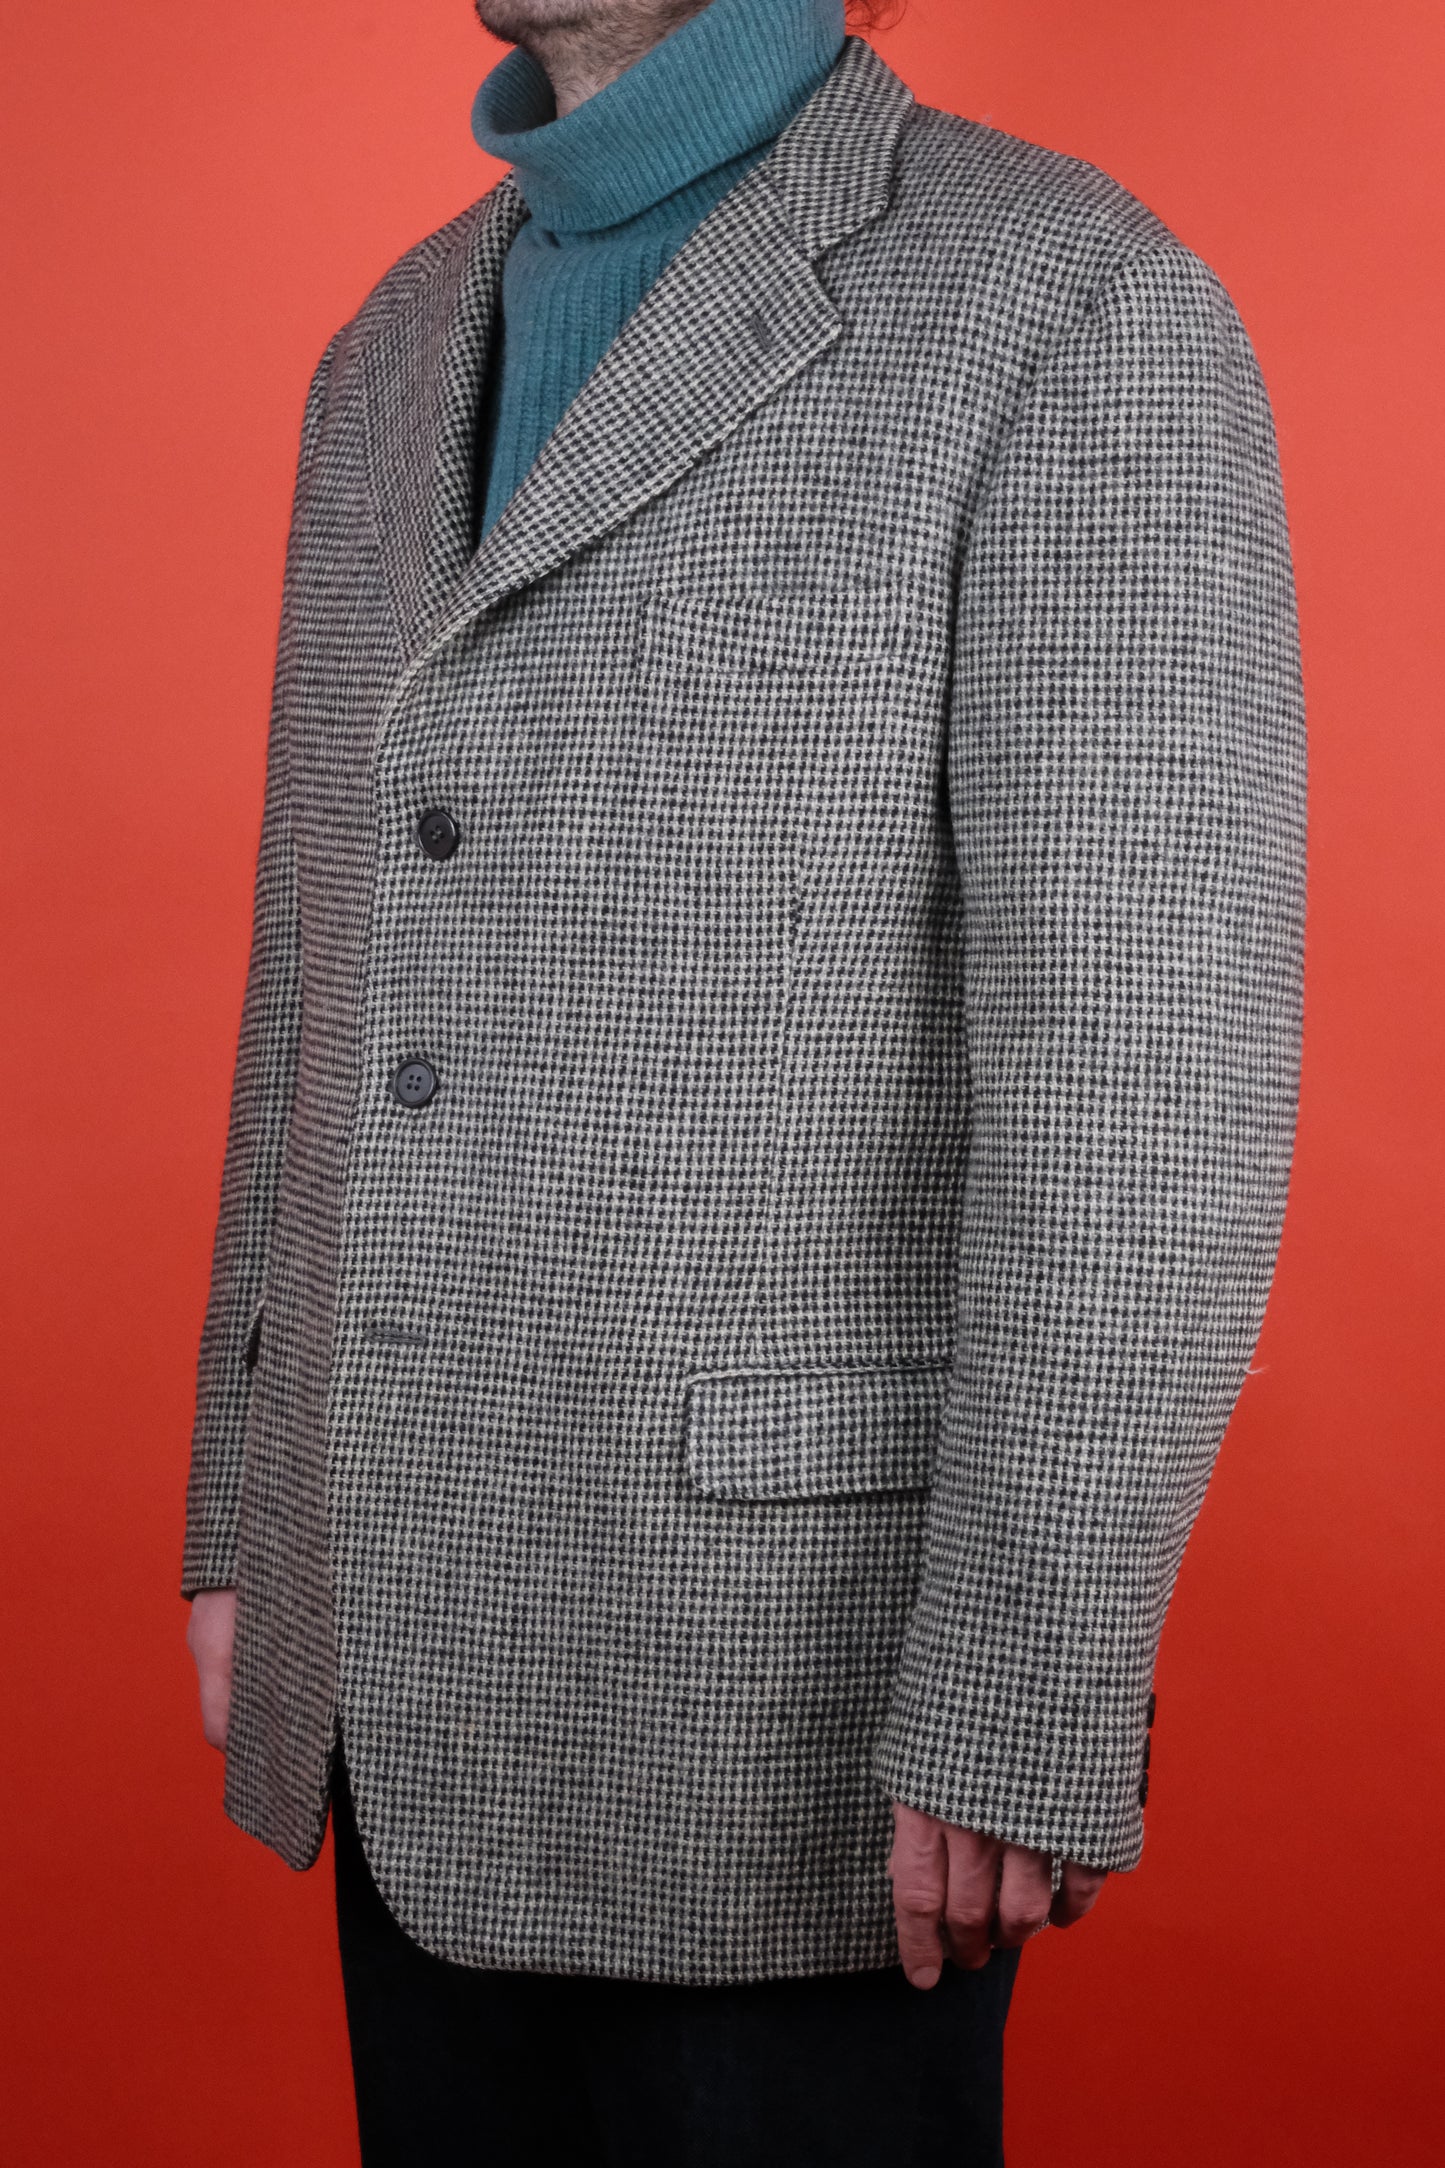 Walter Harris Tweed Suit Jacket 'L' - vintage clothing clochard92.com